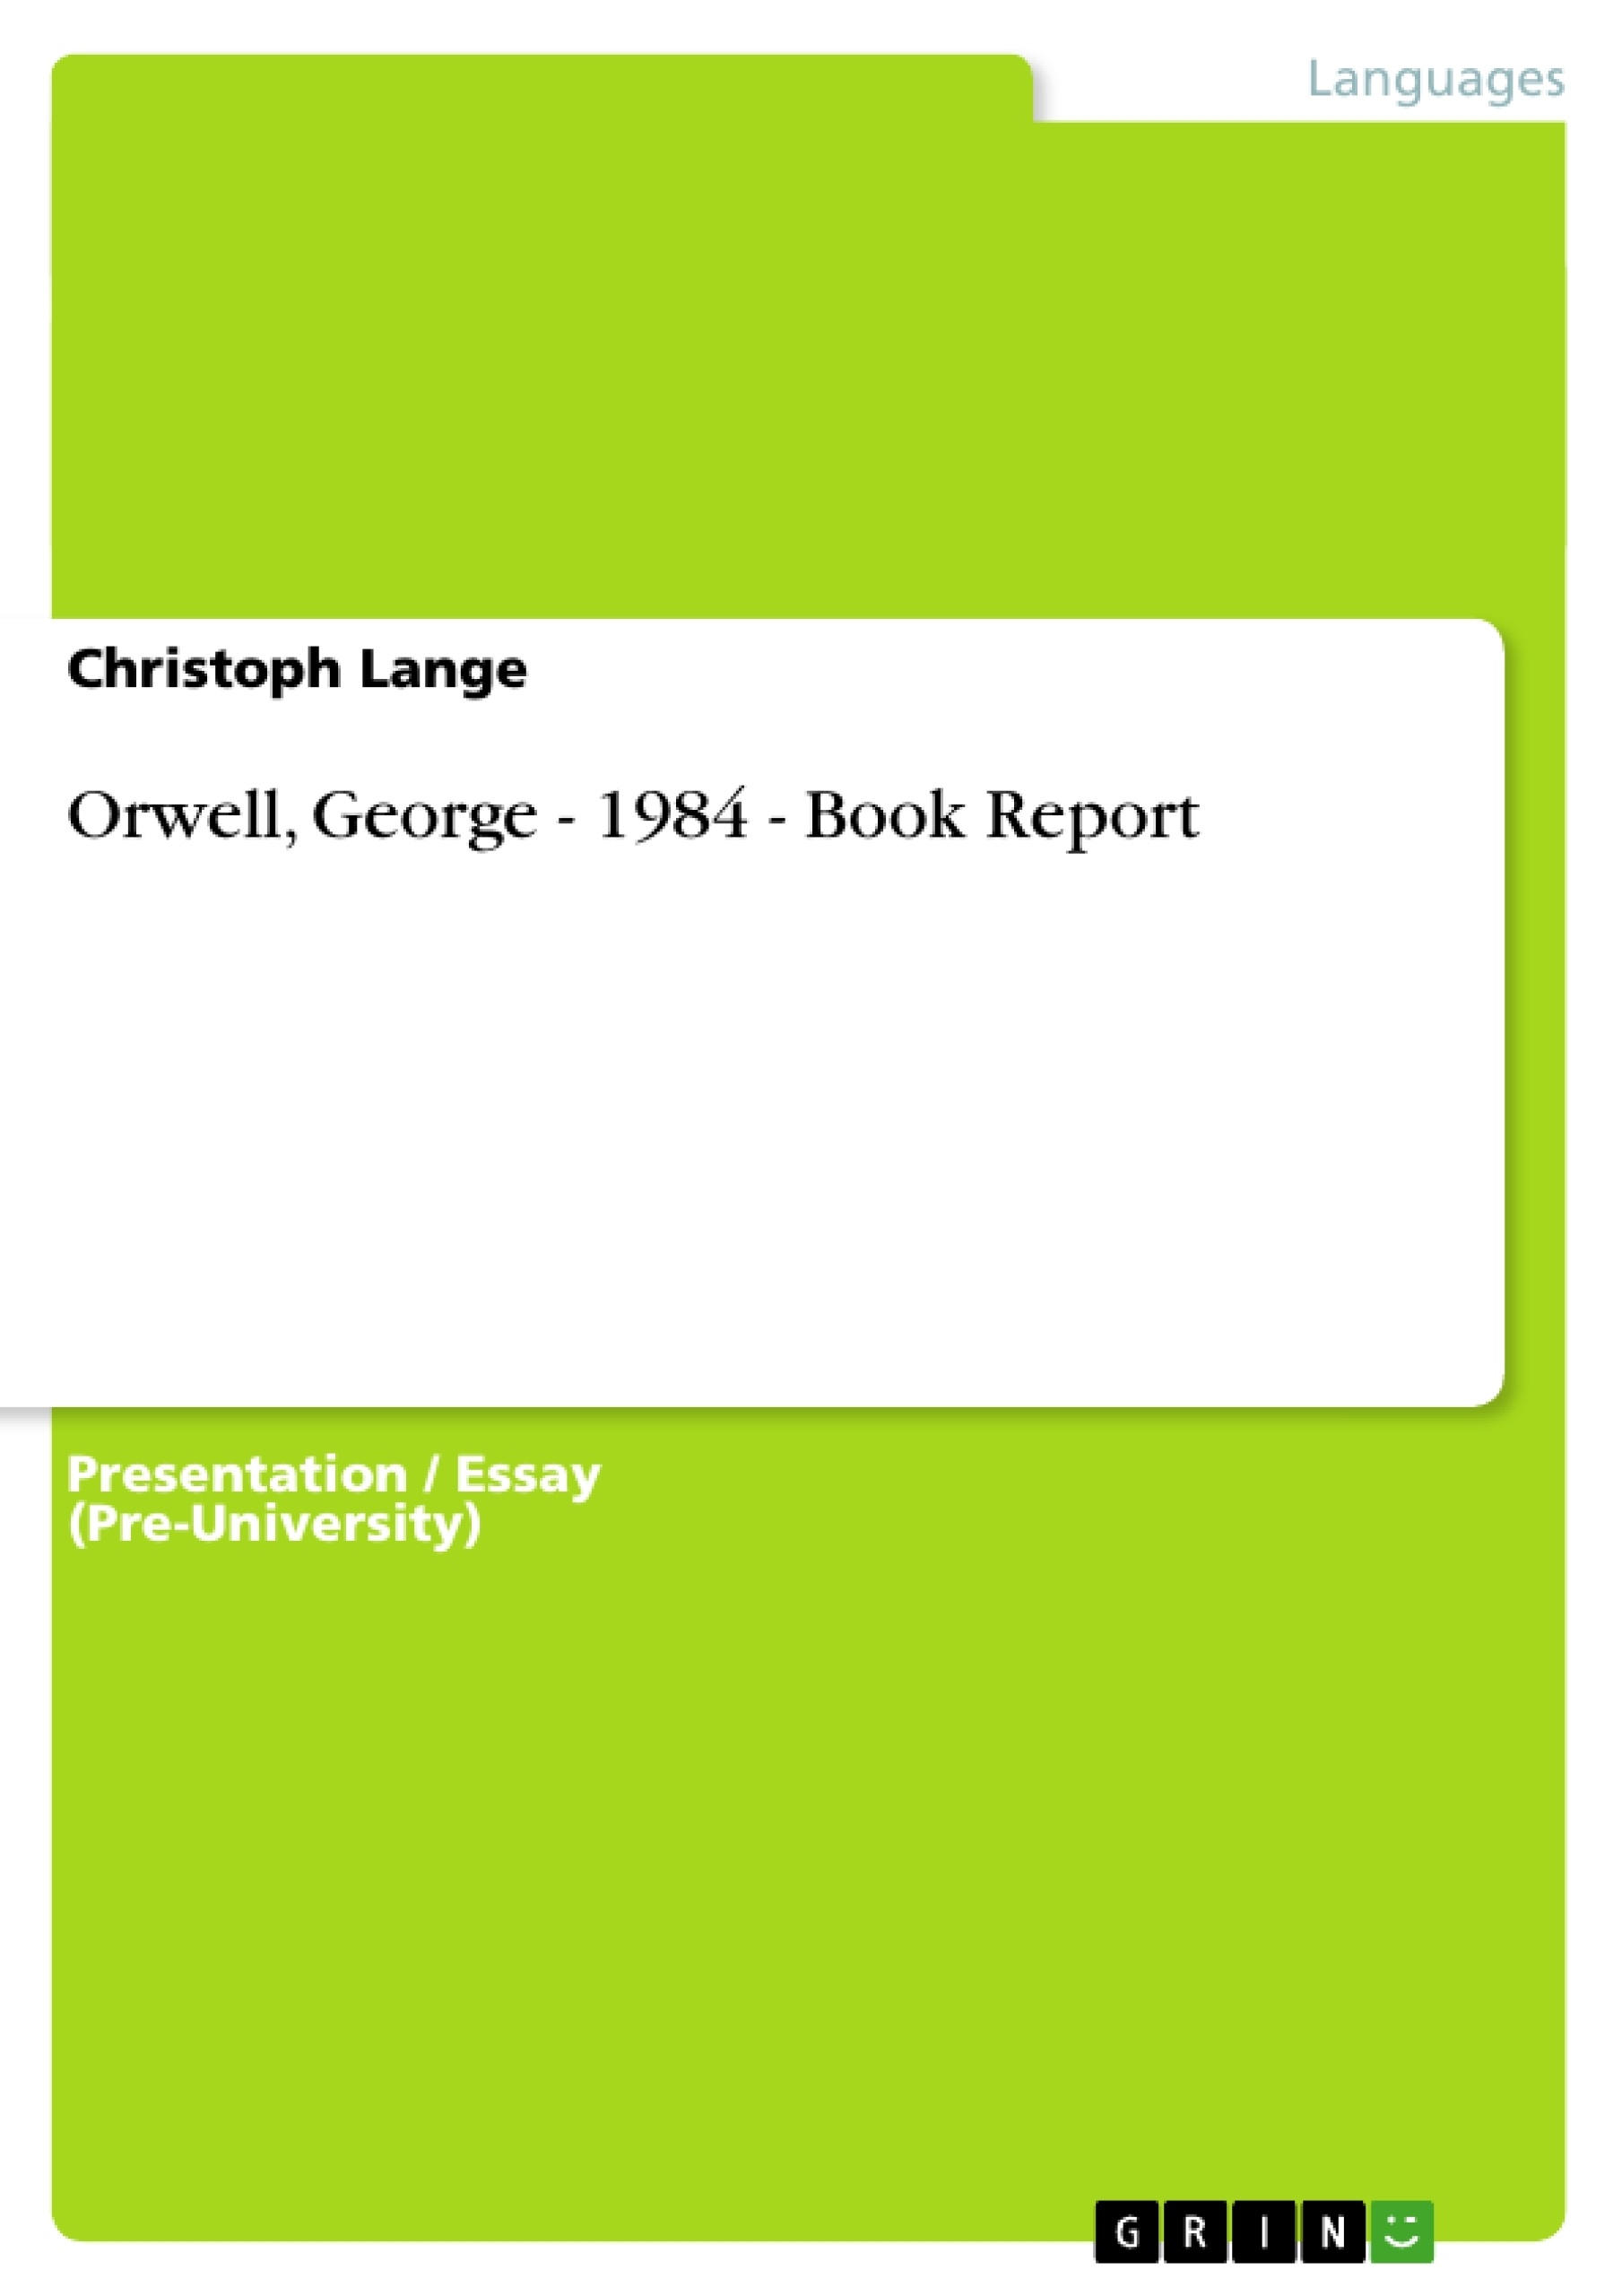 1984 orwell essay topics